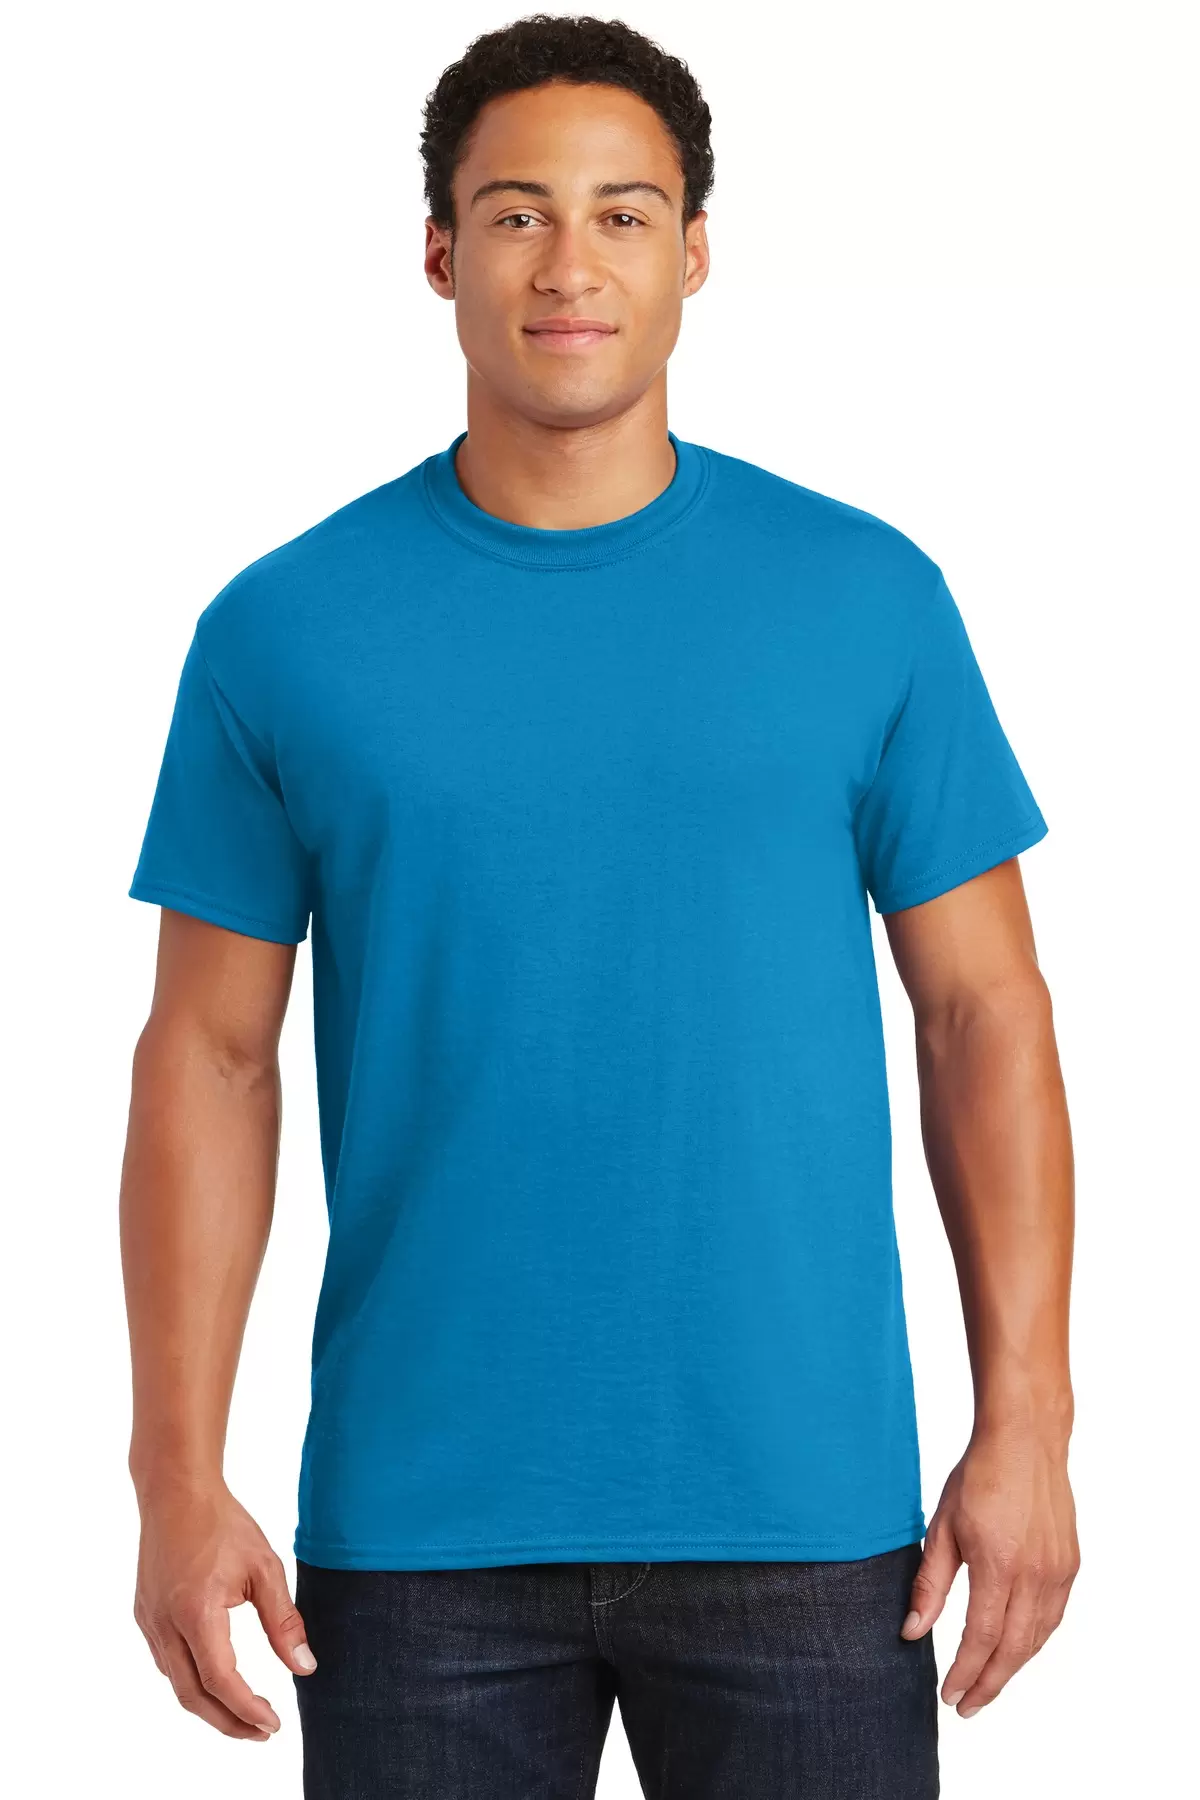 Gildan DryBlend T-Shirt - Jade Dome - L